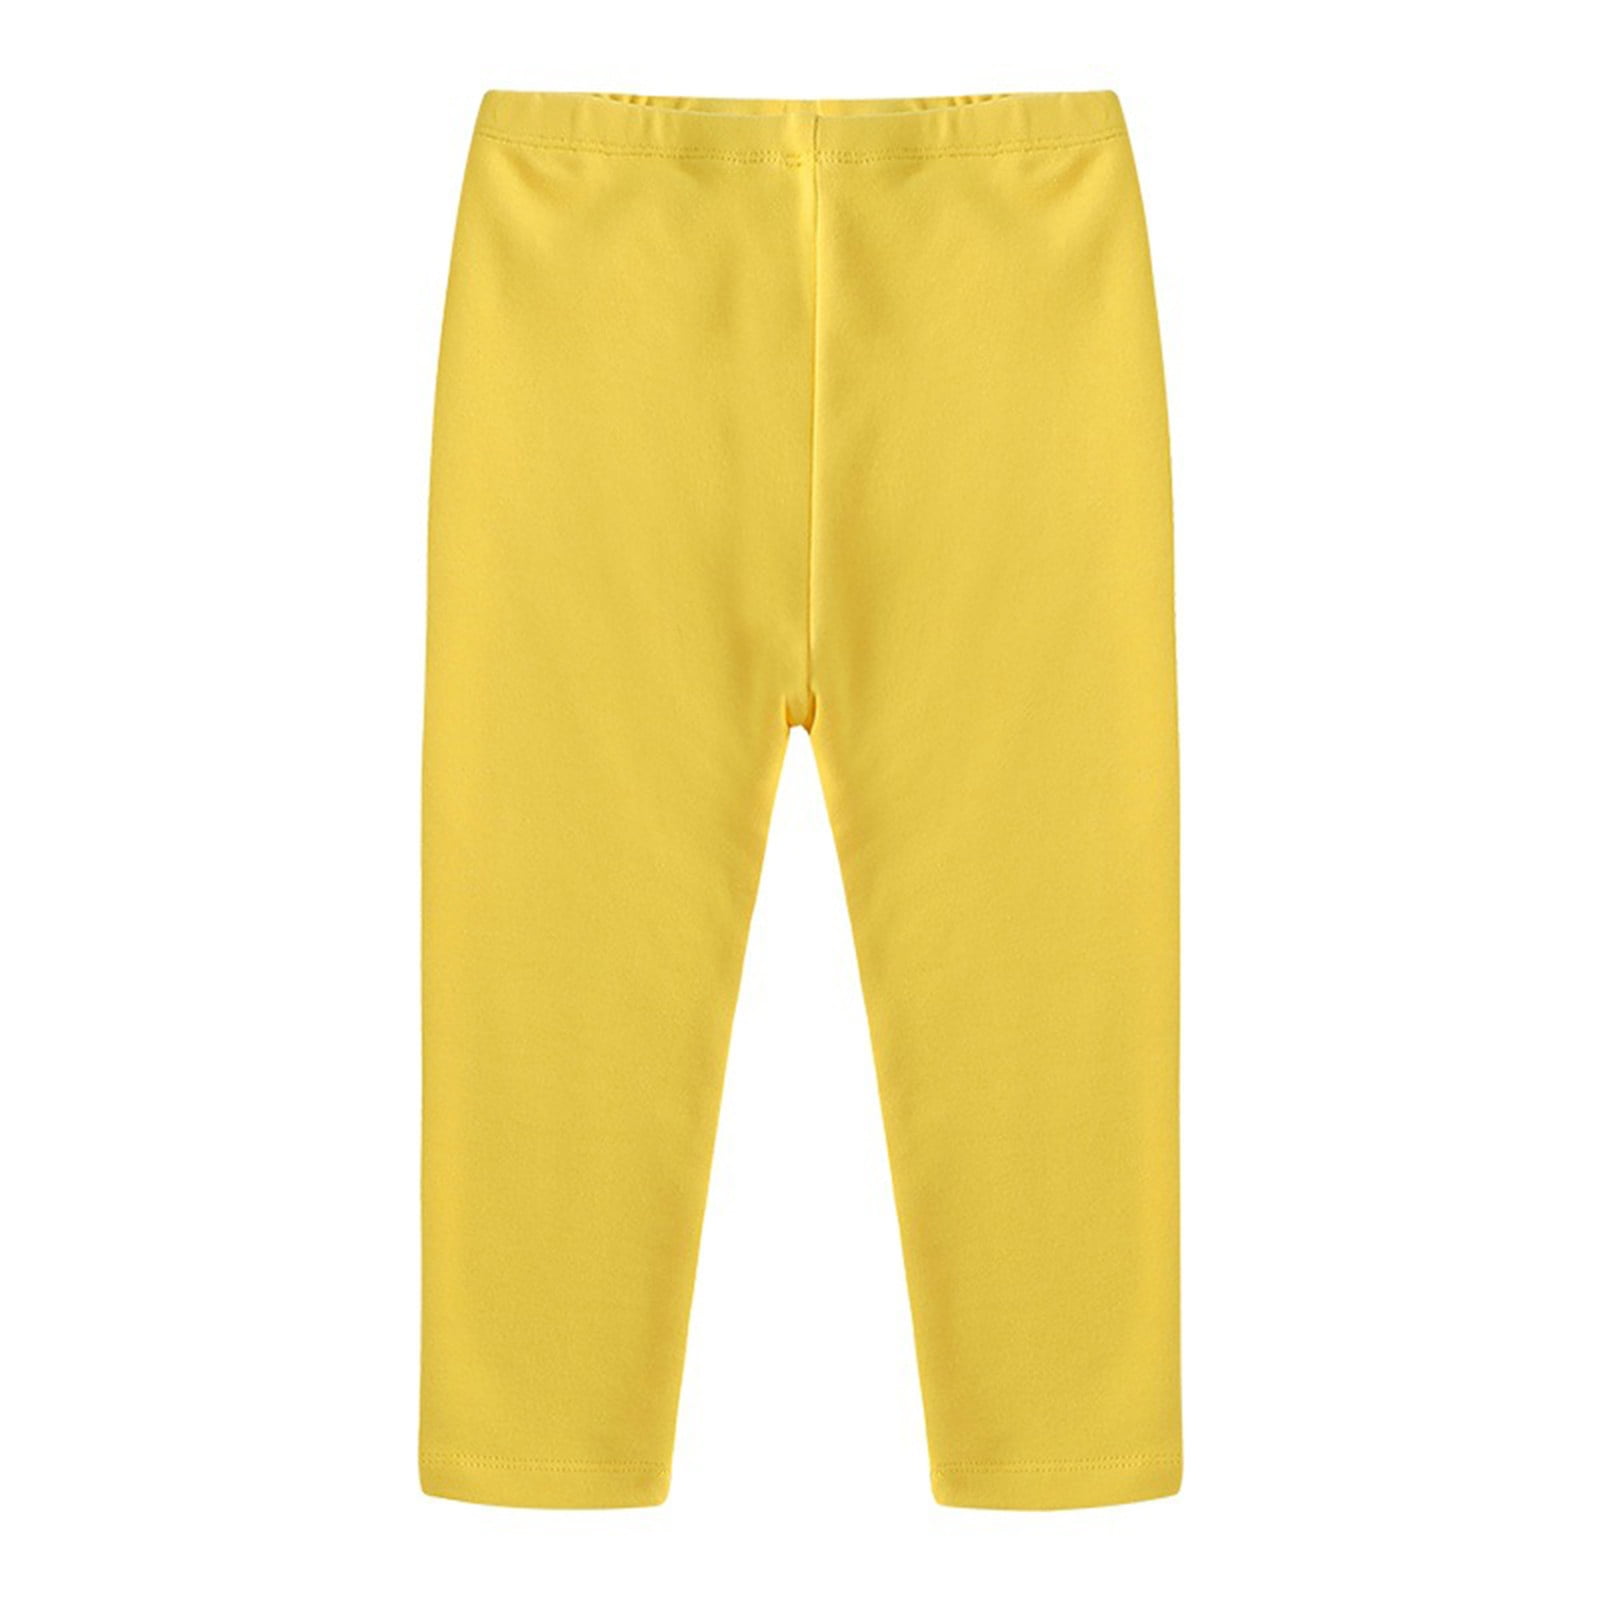 Black leggings with yellow top! | Kids fashion, Girl fashion, Girl